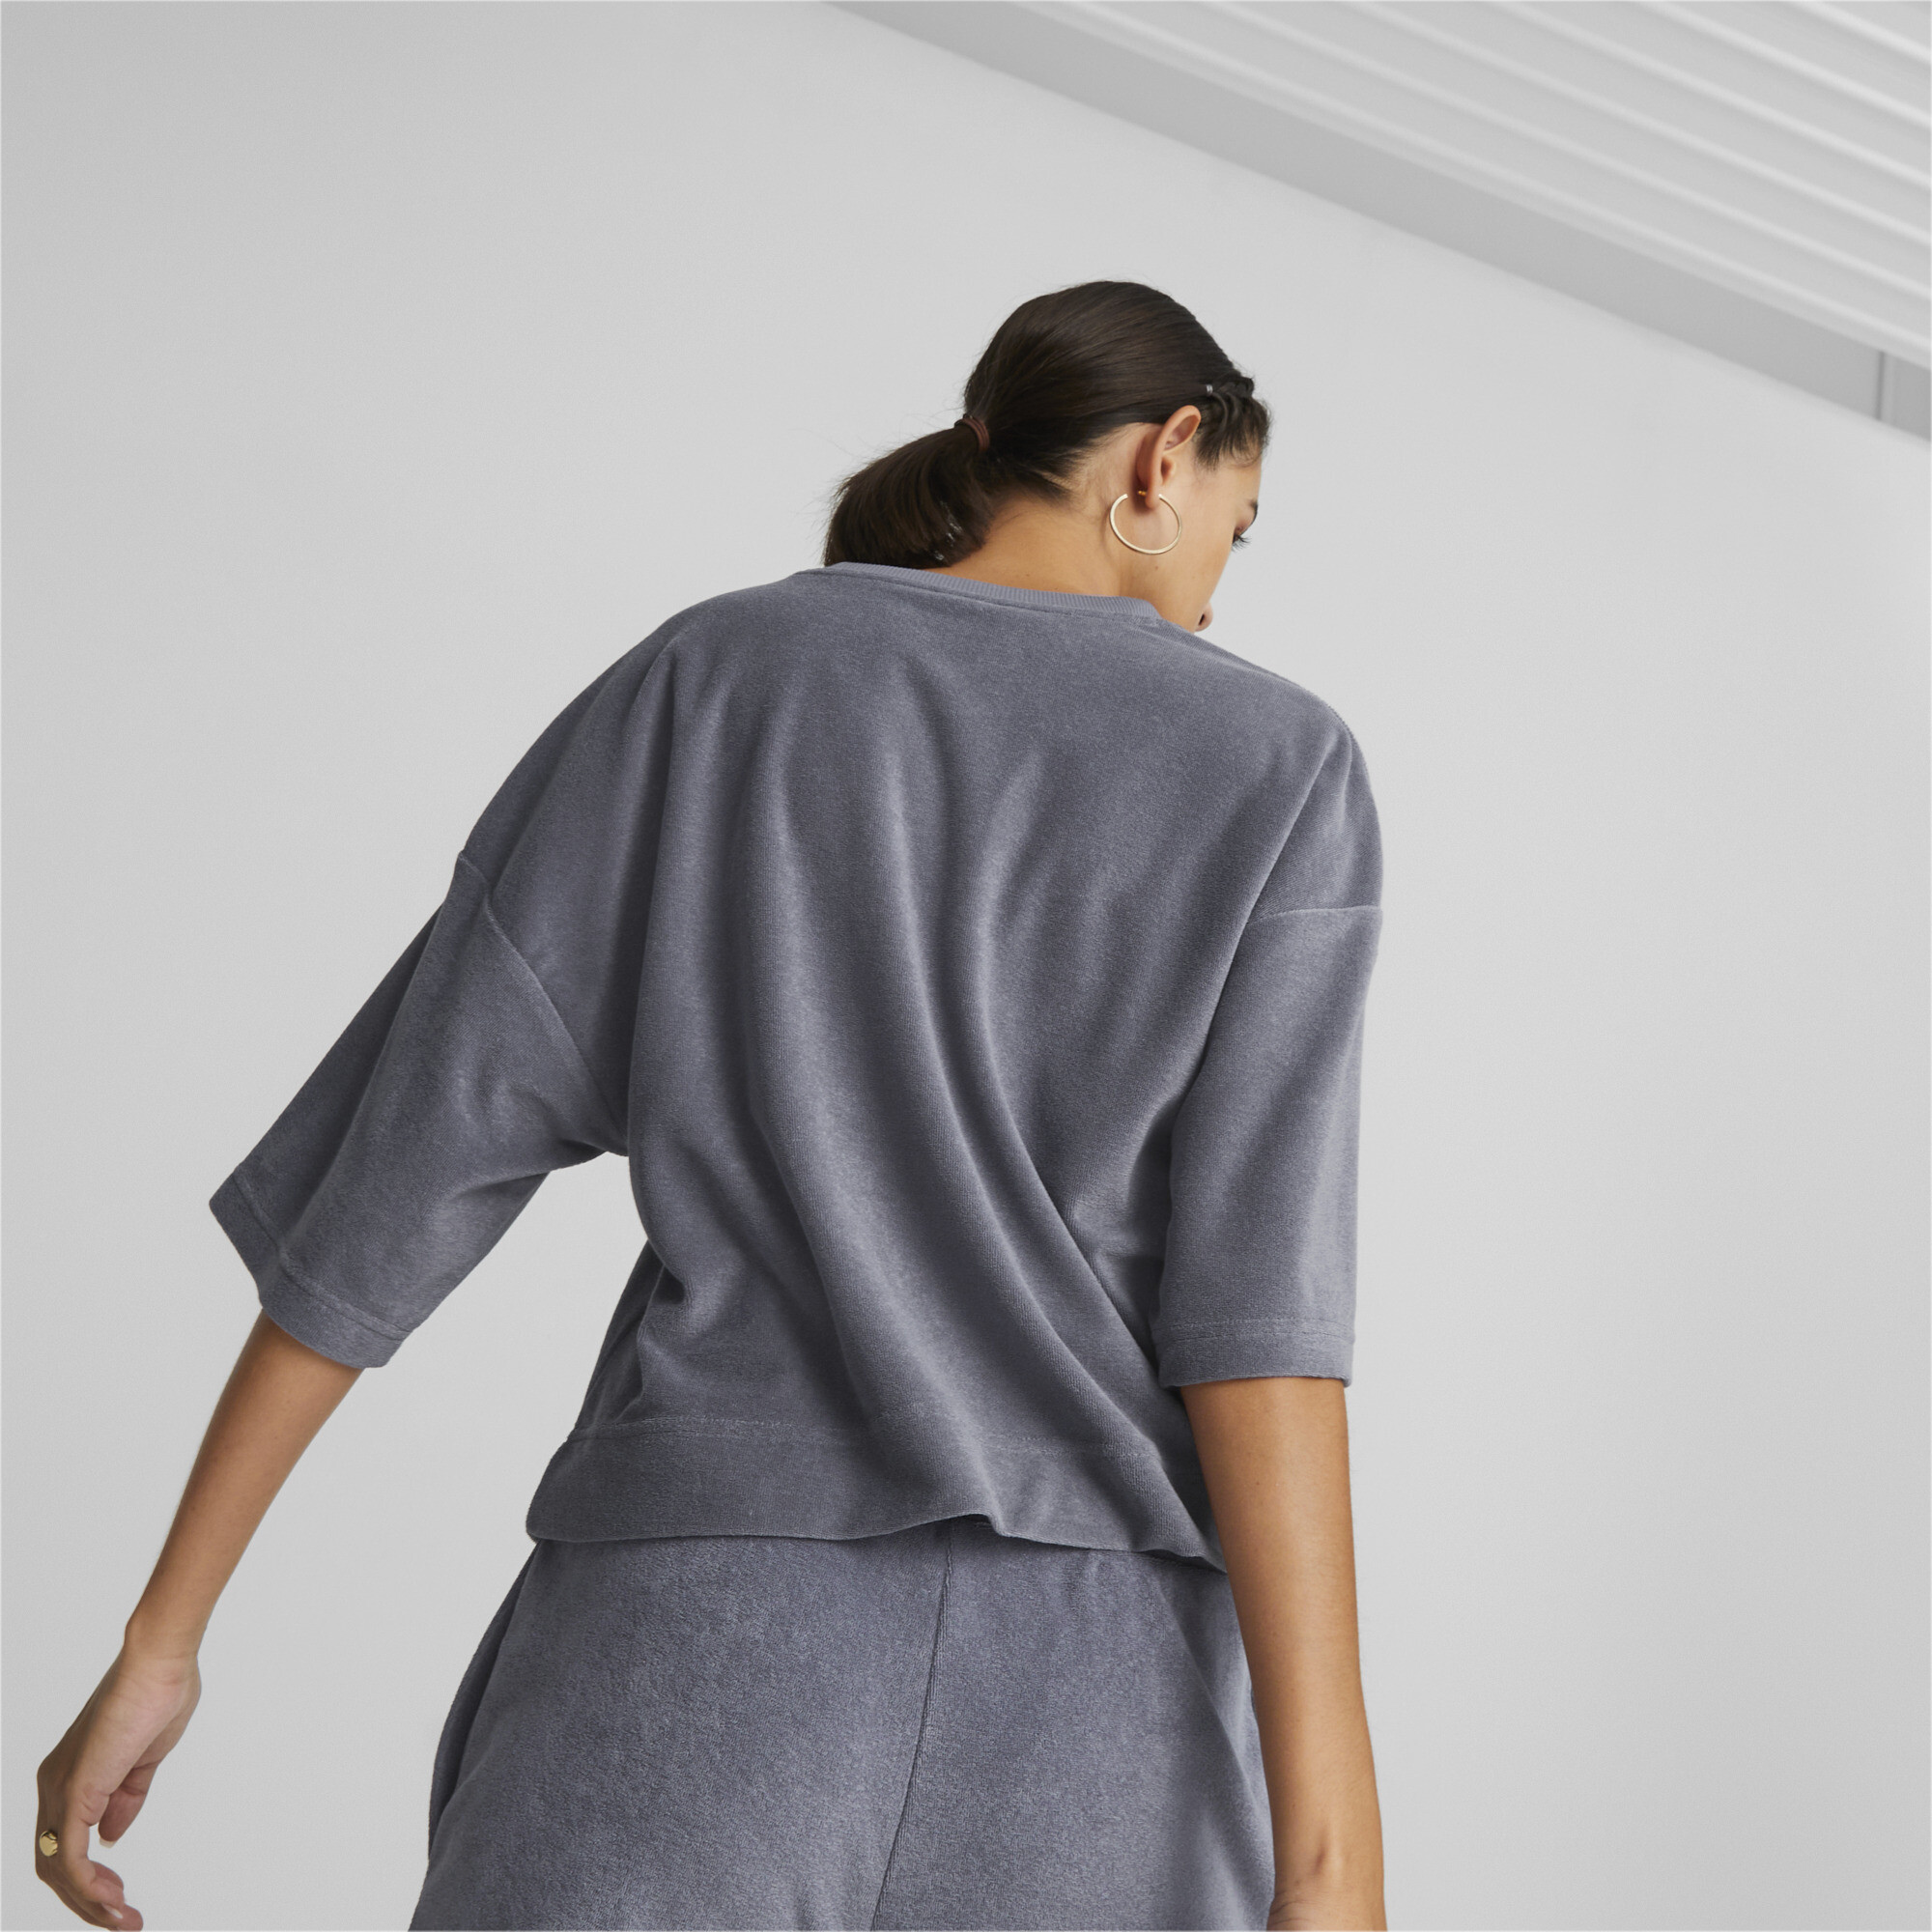 Women's Puma Classics Towelling T-Shirt, Gray, Size XL, Clothing